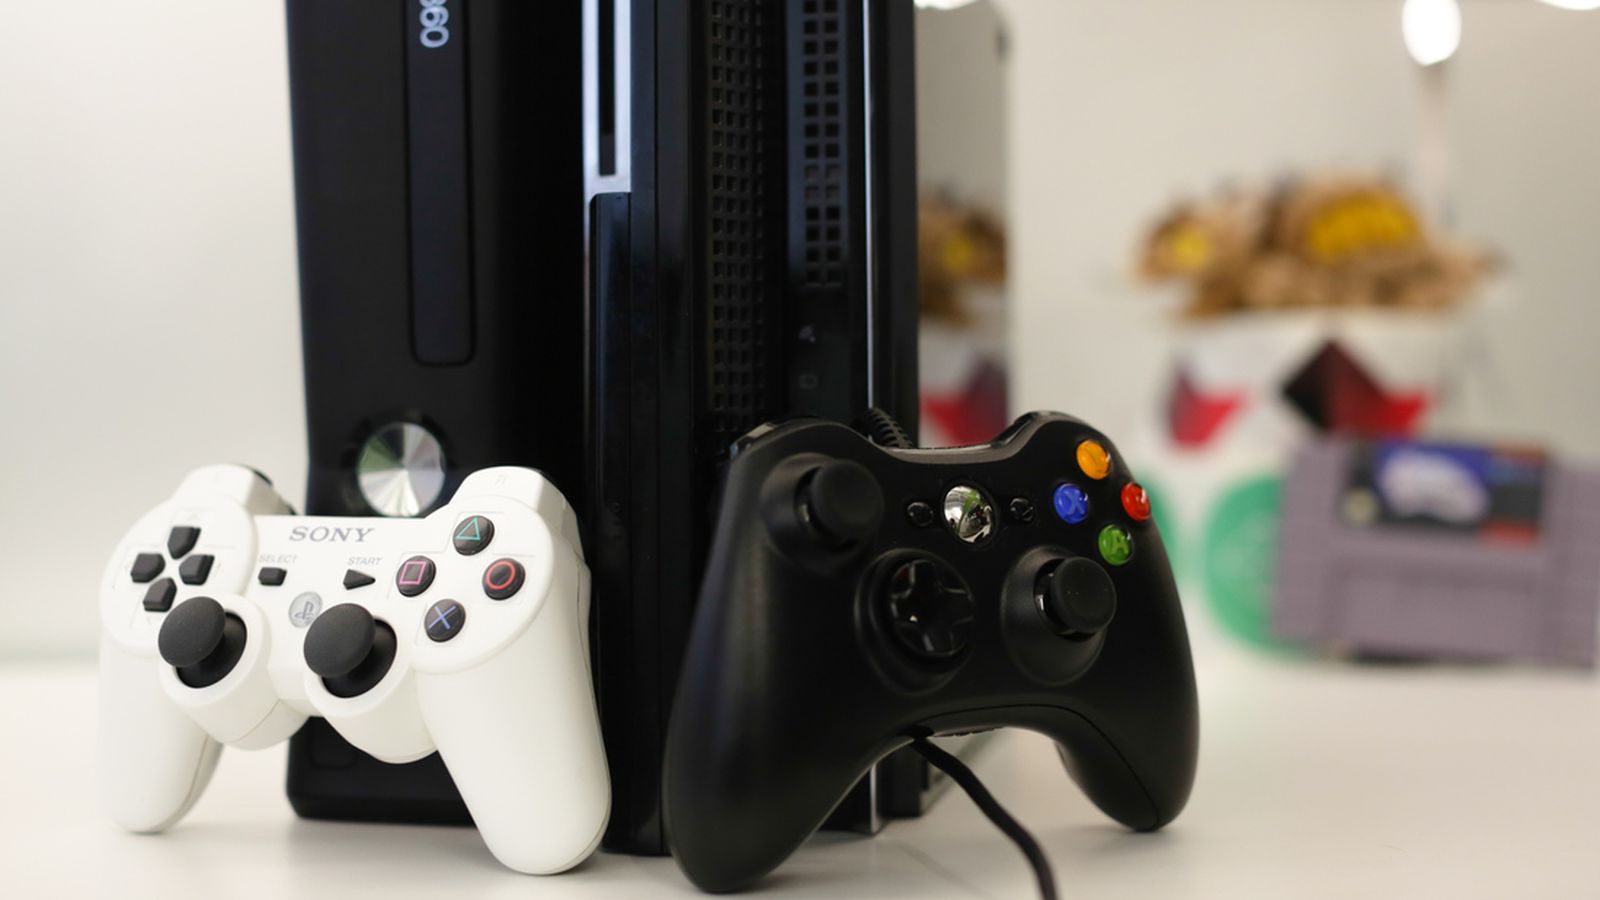 GameStop Black Friday deals include $199 PS3, Xbox 360 hardware bundles